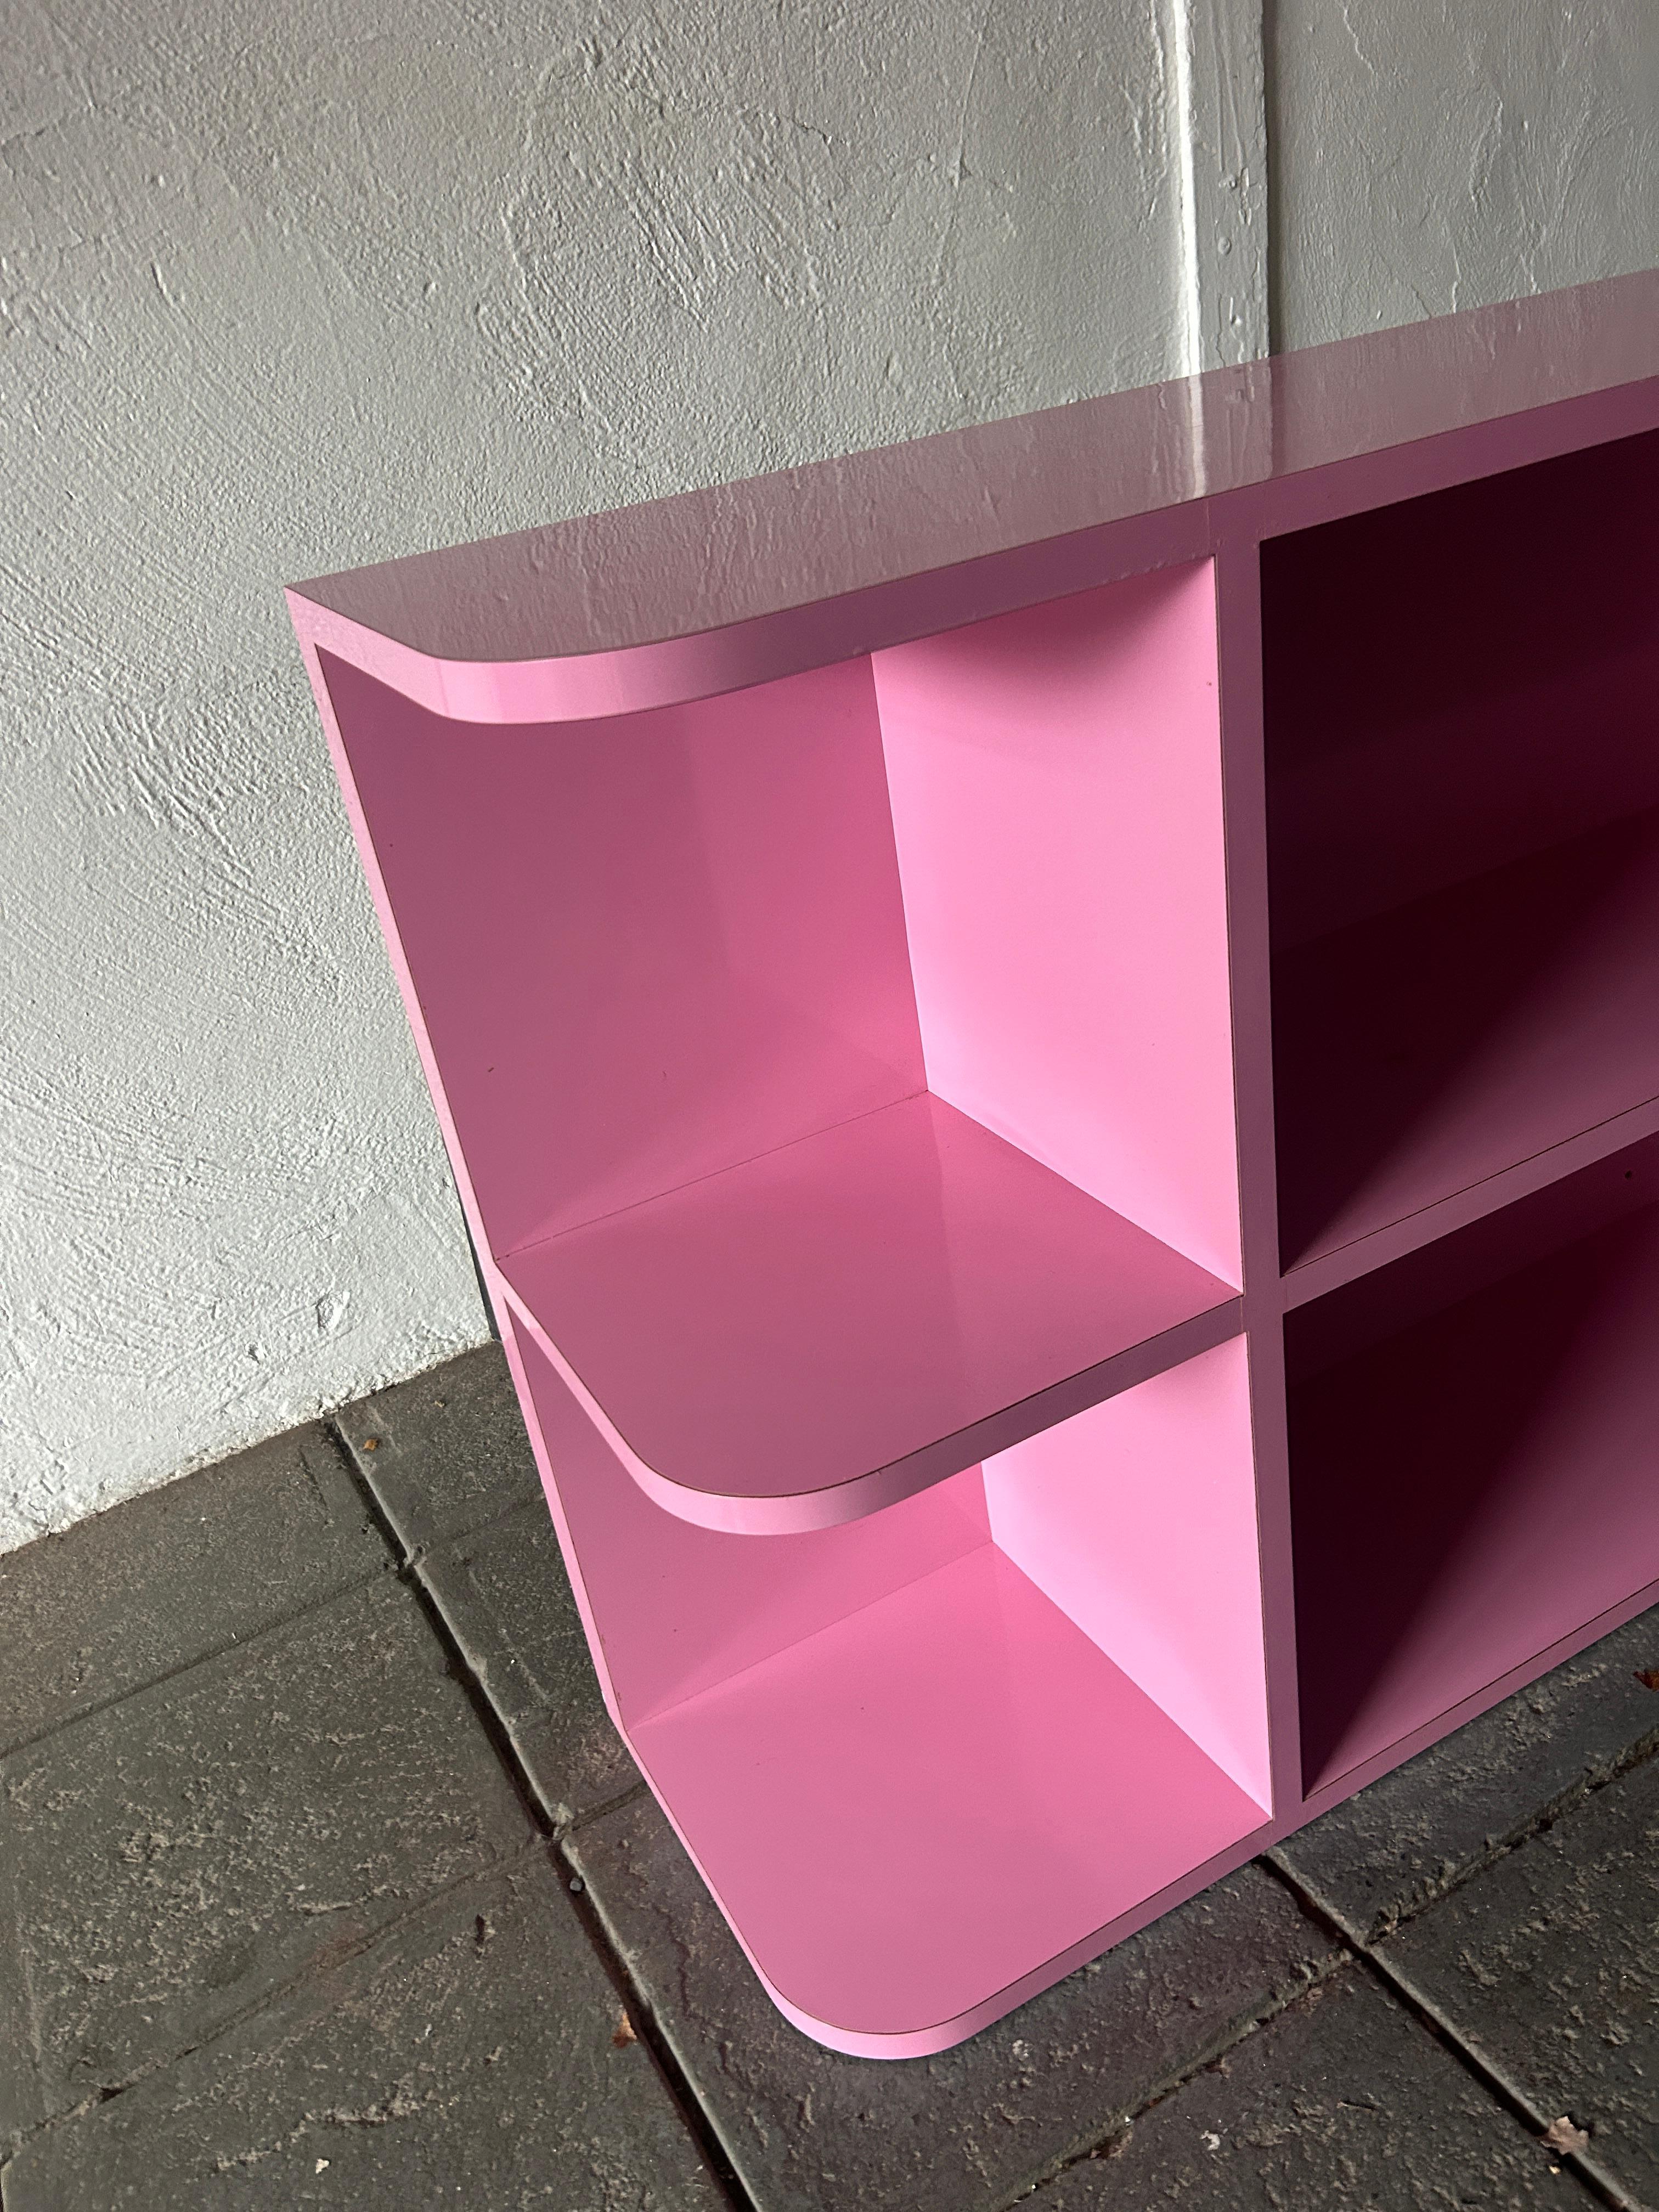 American Pop art Post modern Pink Gloss Laminate floating wall mounted shelf unit For Sale